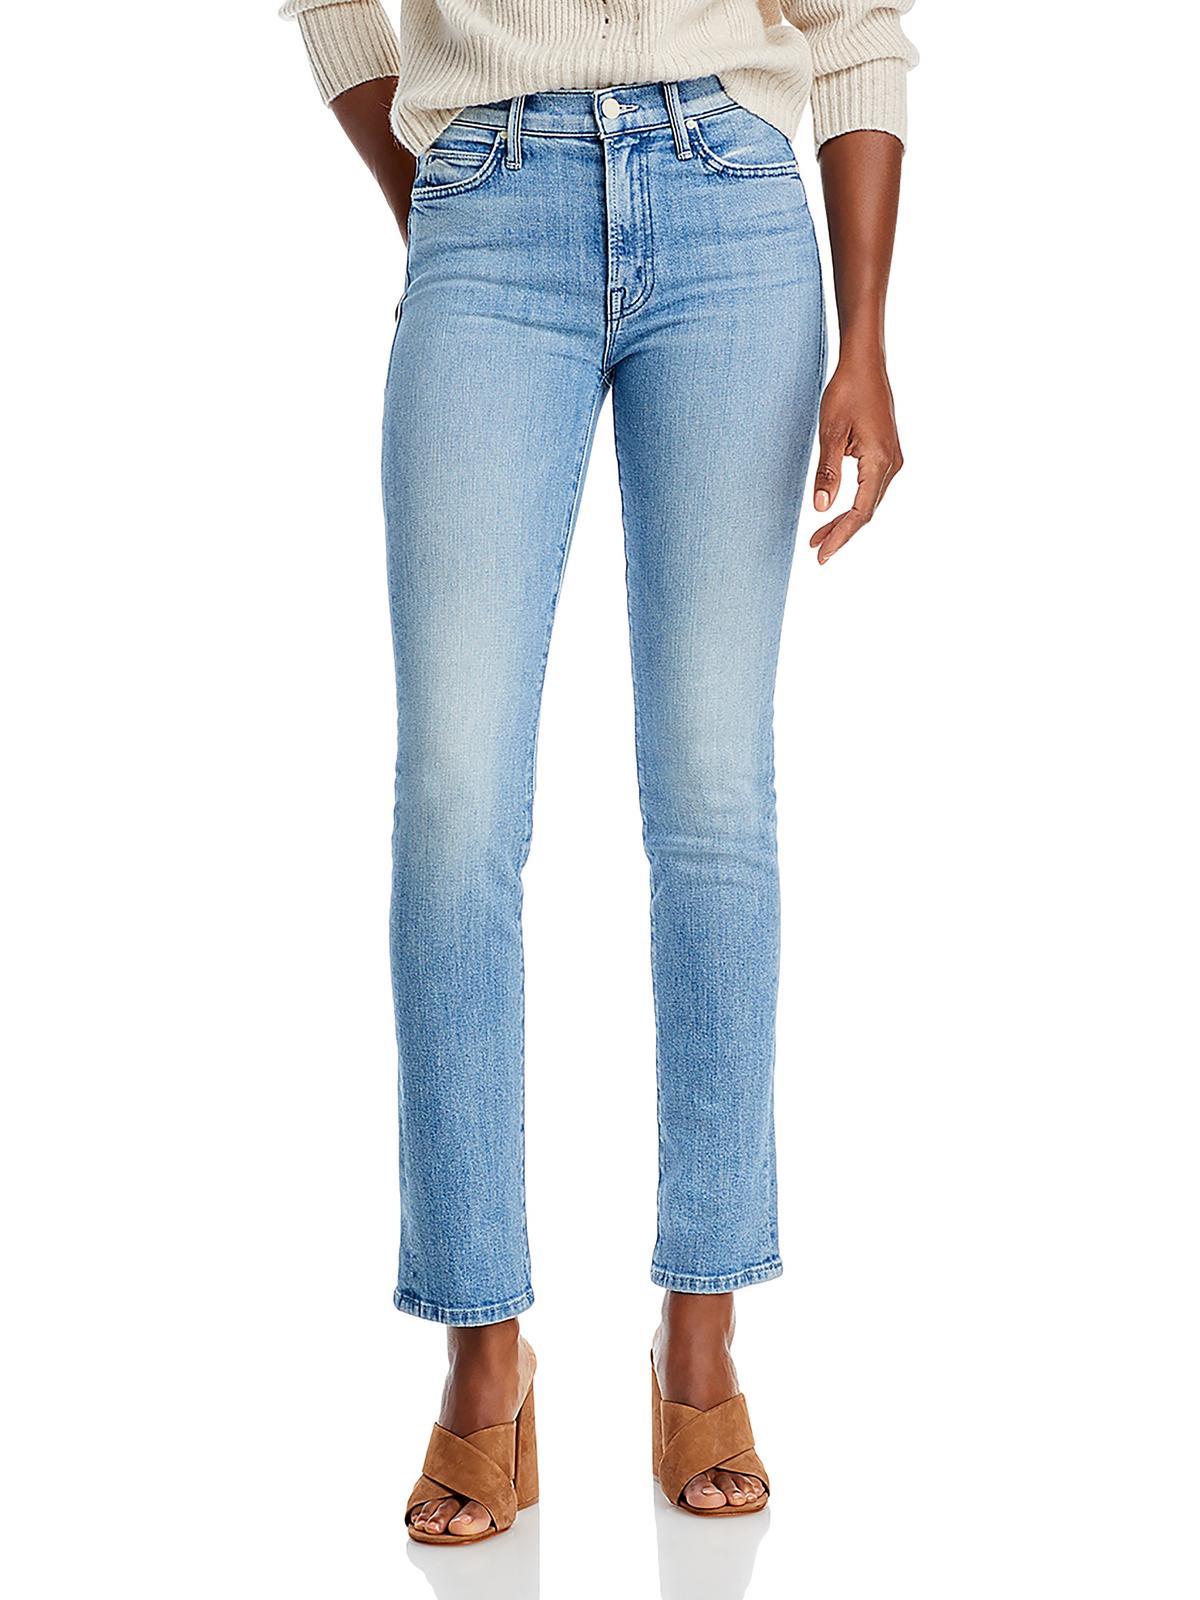 https://cdna.lystit.com/photos/shoppremiumoutlets/6bd09fce/mother-multi-The-Rascal-Medium-Wash-Distressed-Slim-Jeans.jpeg